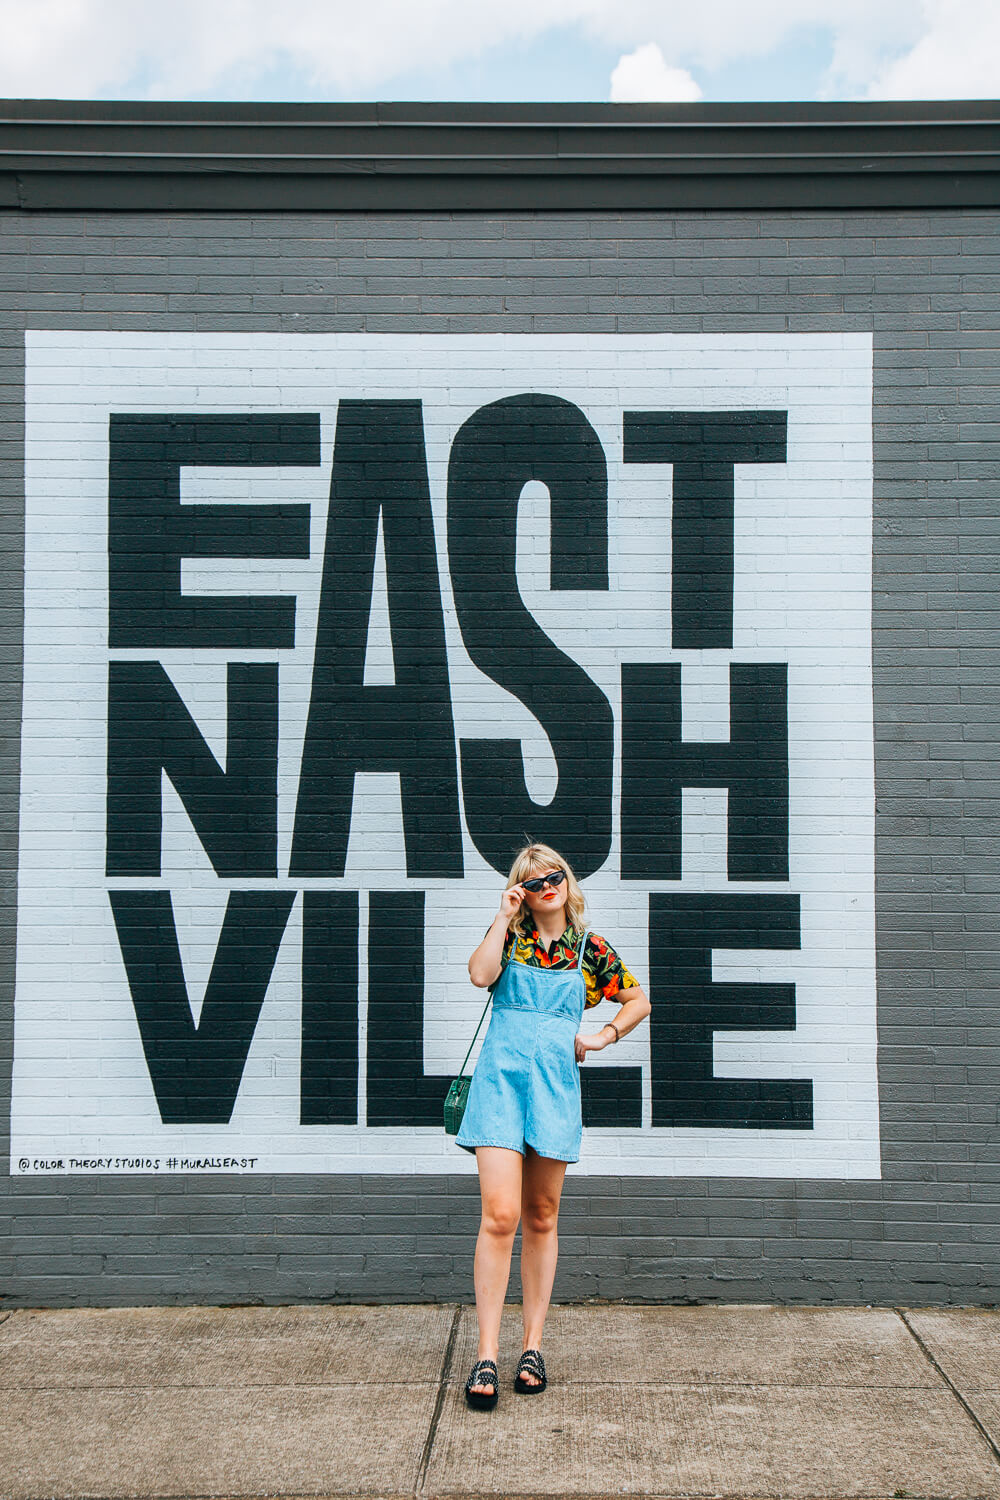 Come along with me! Louis Vuitton Artist trip to Nashville, TN